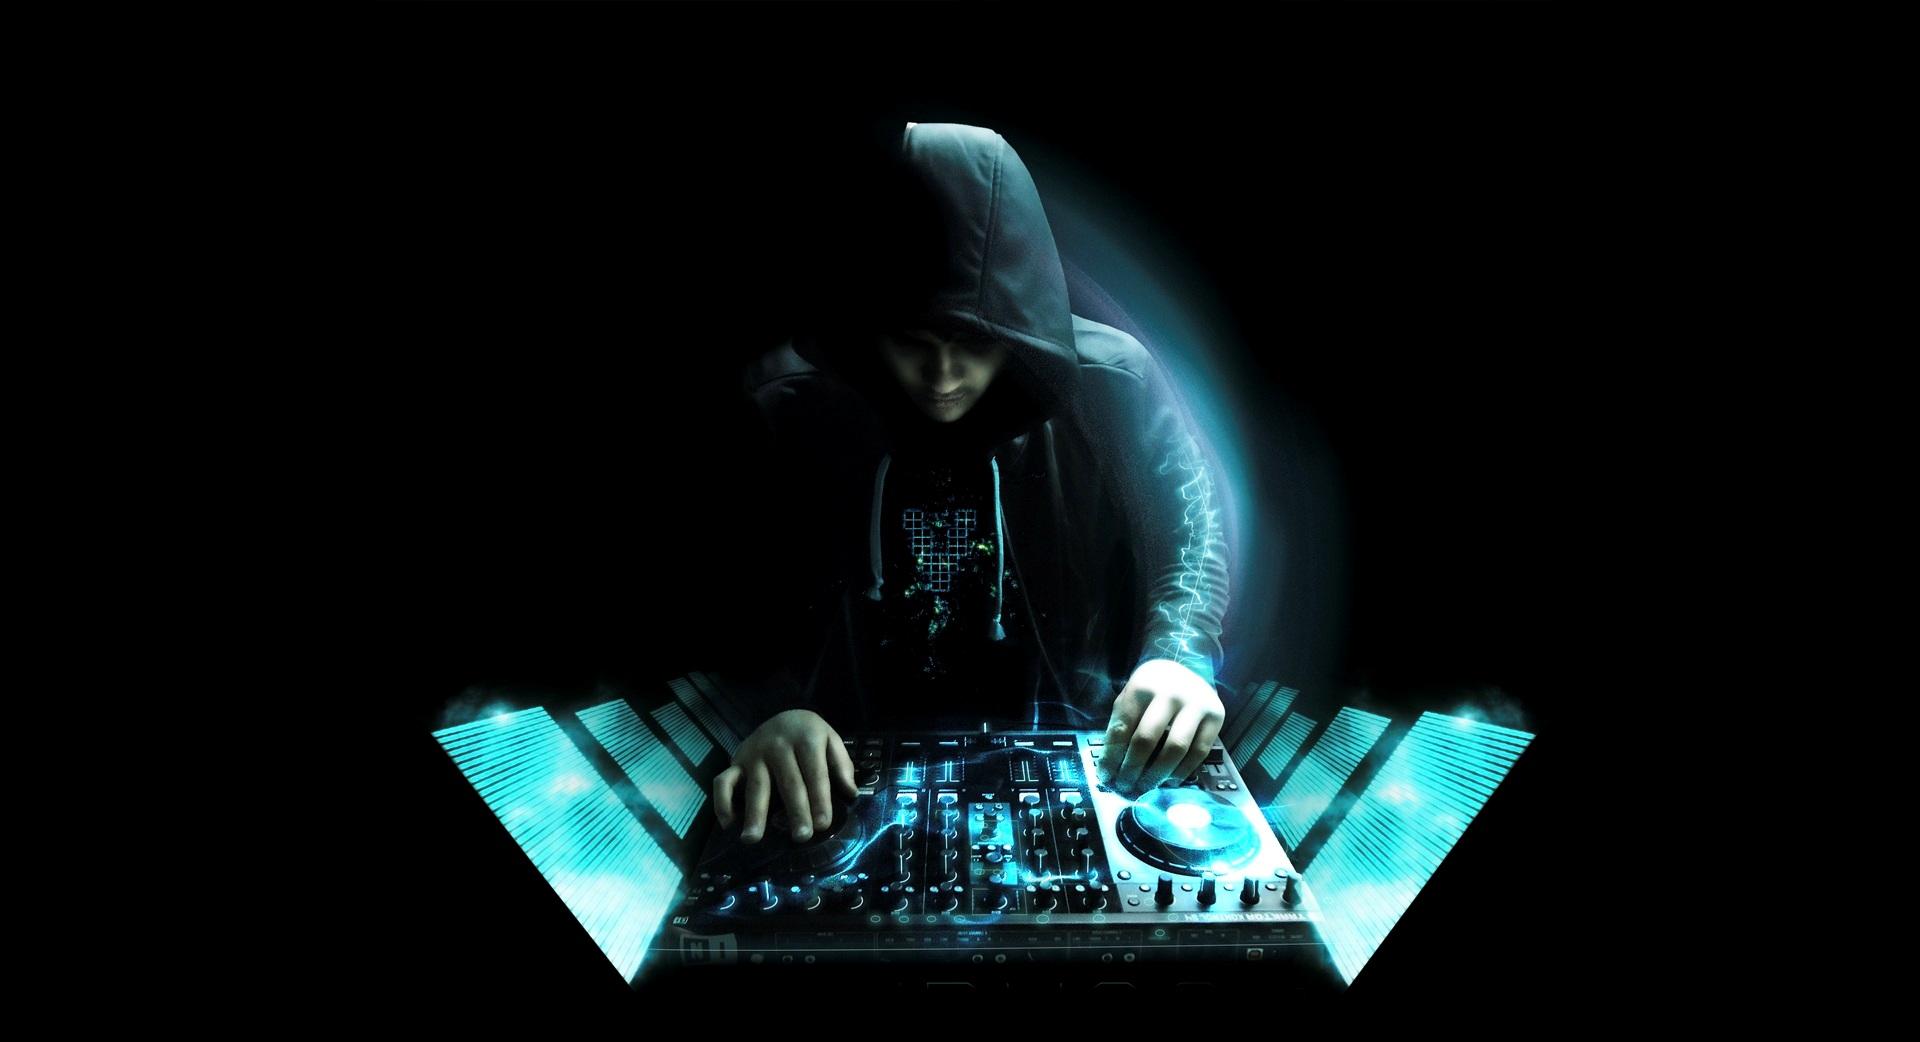 Hình nền DJ đẹp - DJ Music wallpaper download, dj music wallpaper hd